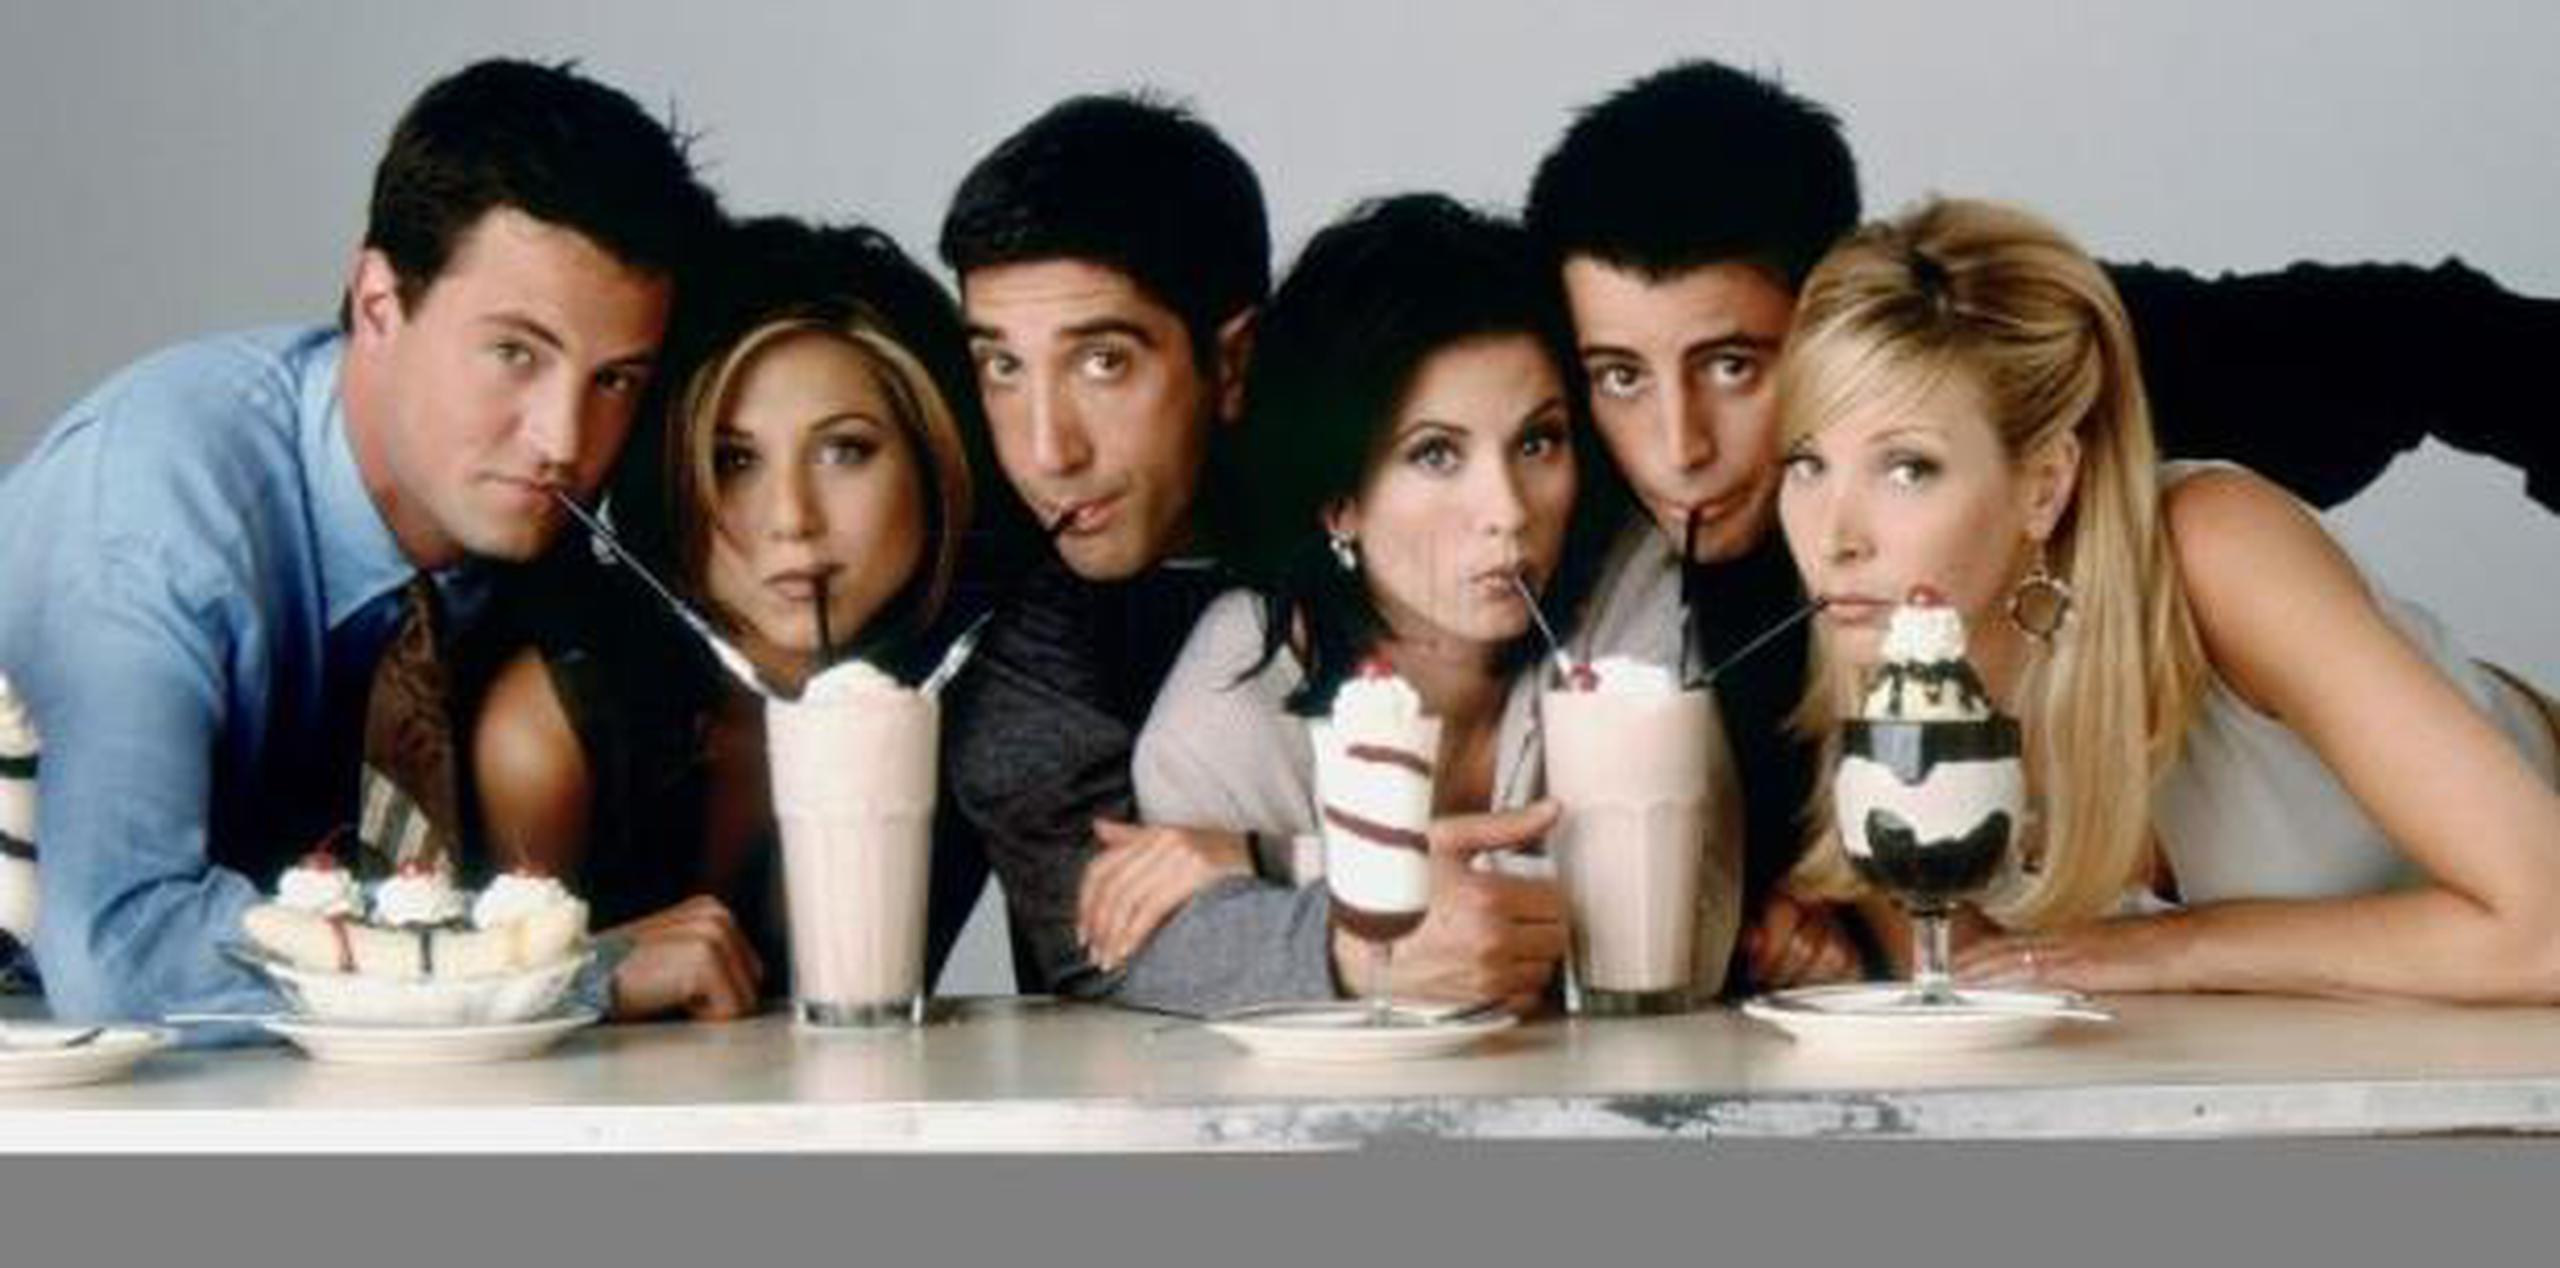 Elenco de la serie Friends conformado por Jennifer Aniston (Rachel), Courteney Cox (Monica), Lisa Kudrow (Phoebe), Matt LeBlanc (Joey), Matthew Perry (Chandler) y David Schwimmer (Ross). (Archivo)